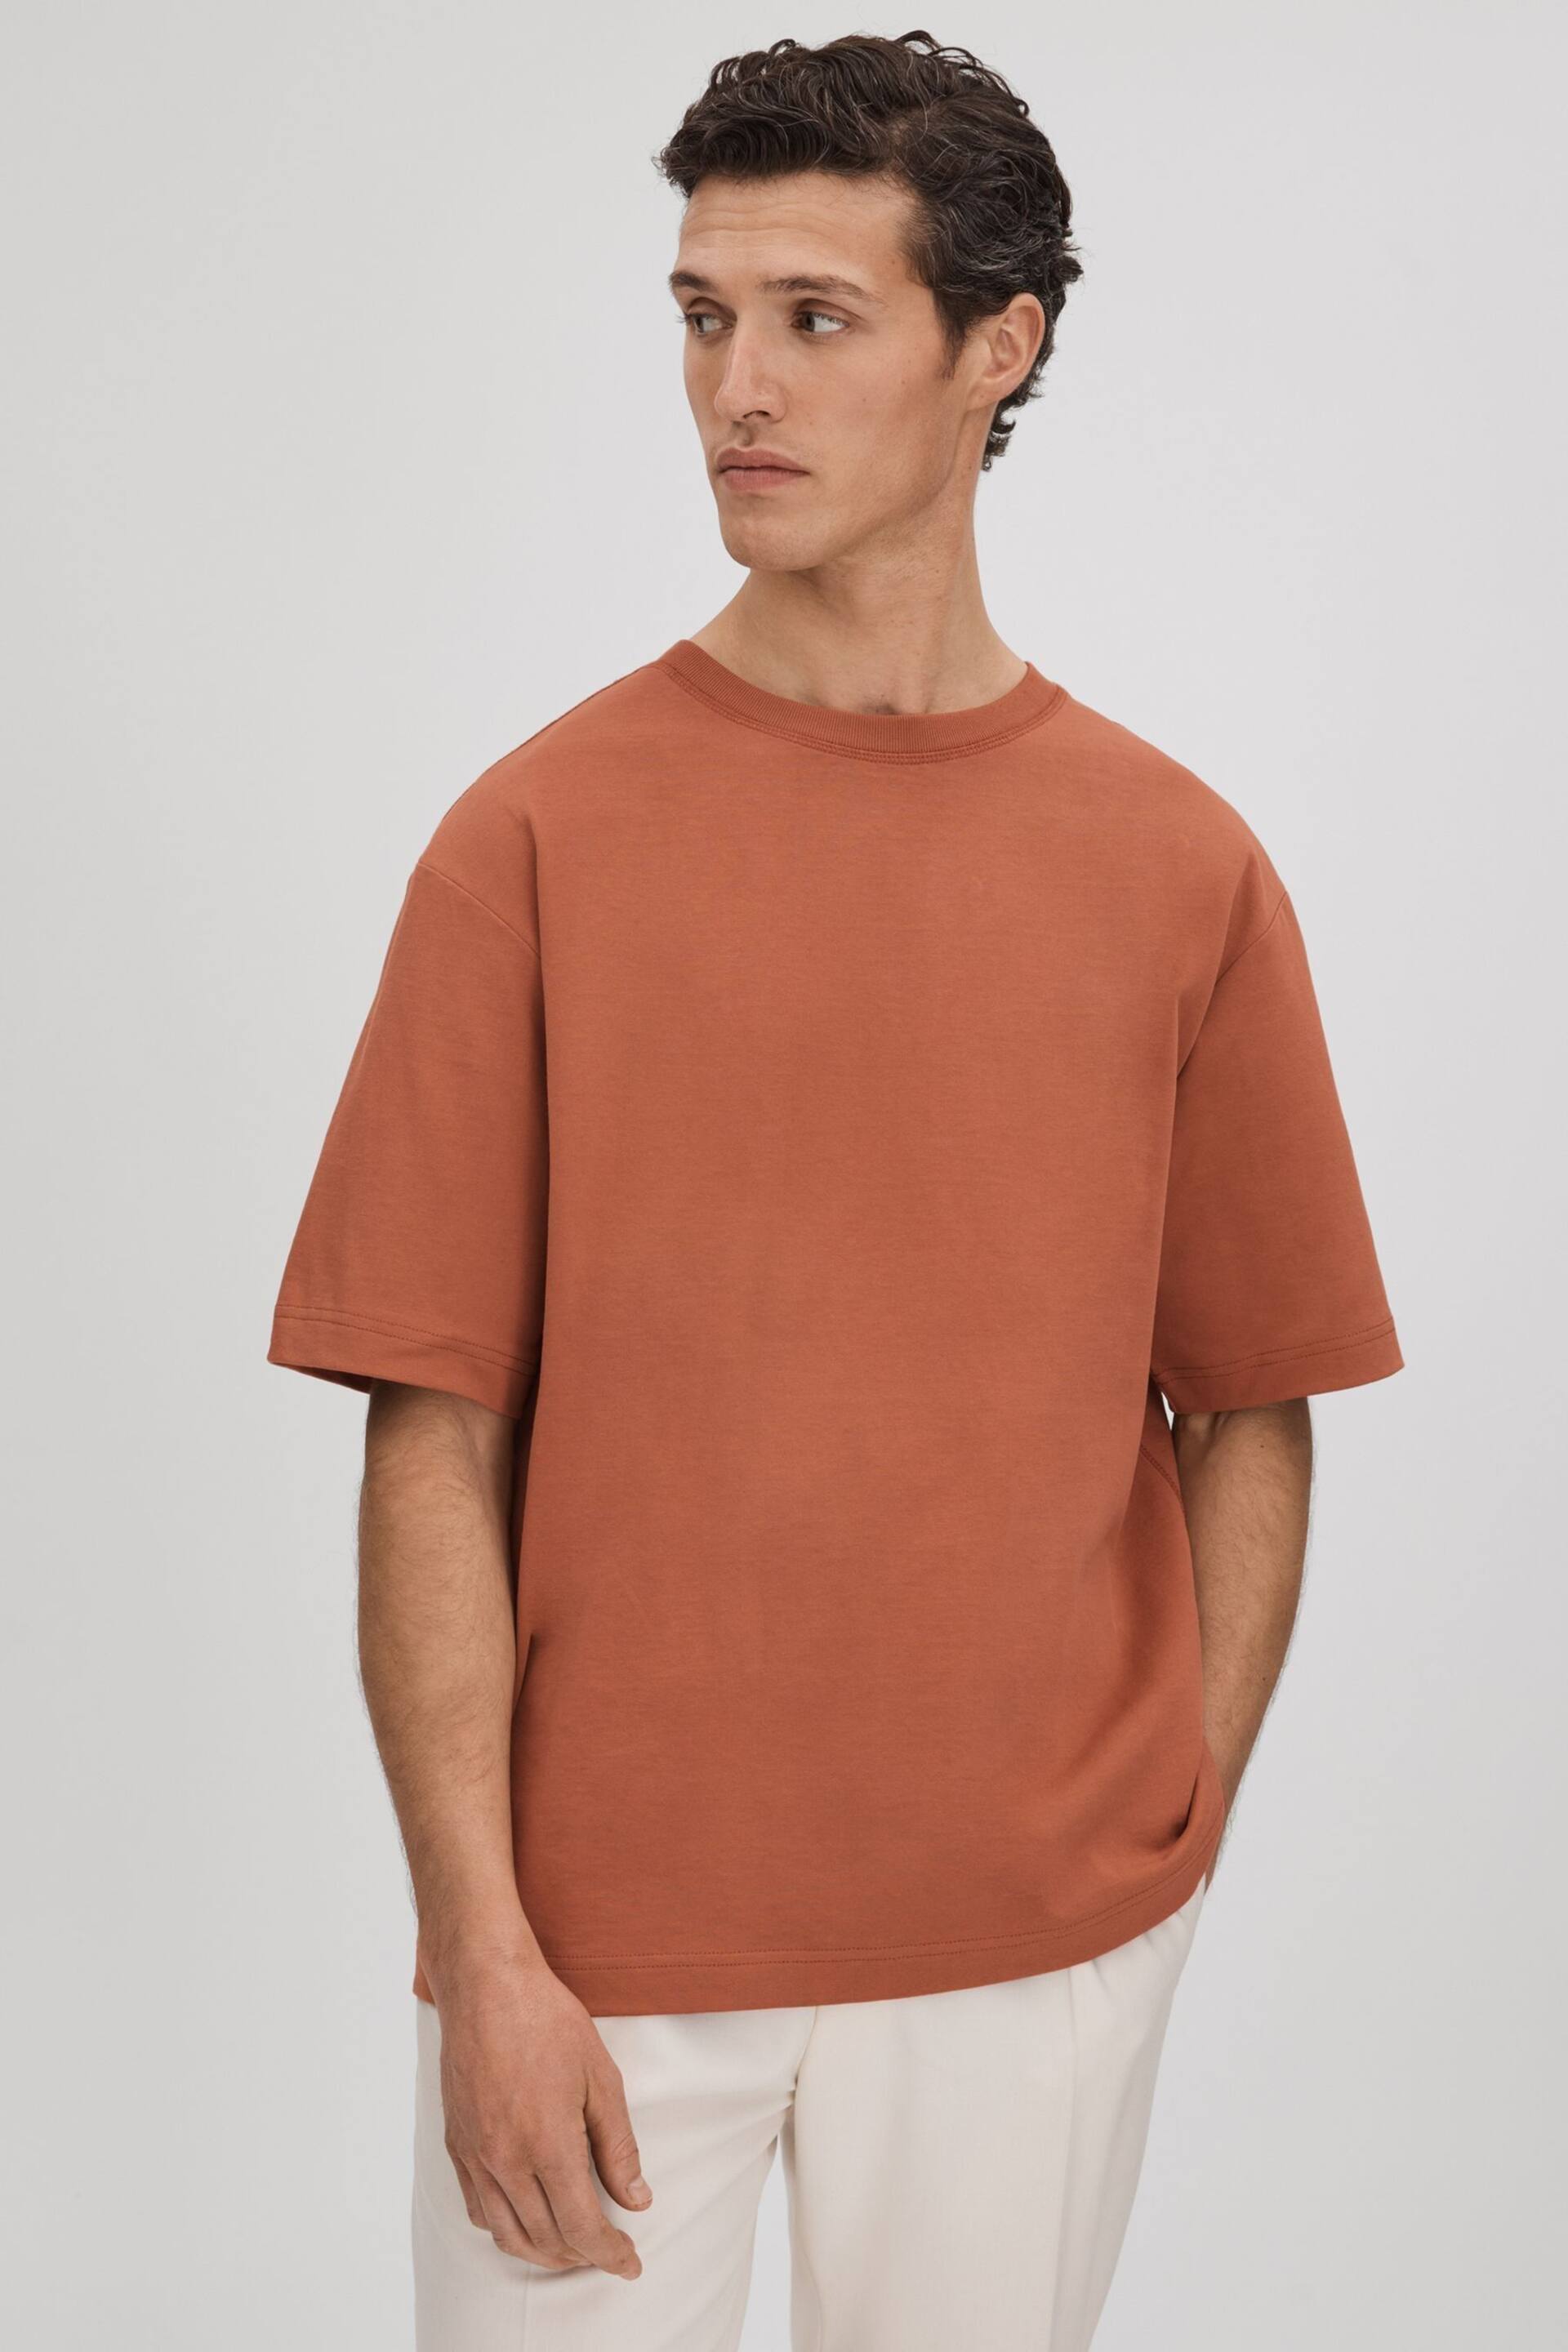 Reiss Raw Sienna Tate Oversized Garment Dye T-Shirt - Image 1 of 5